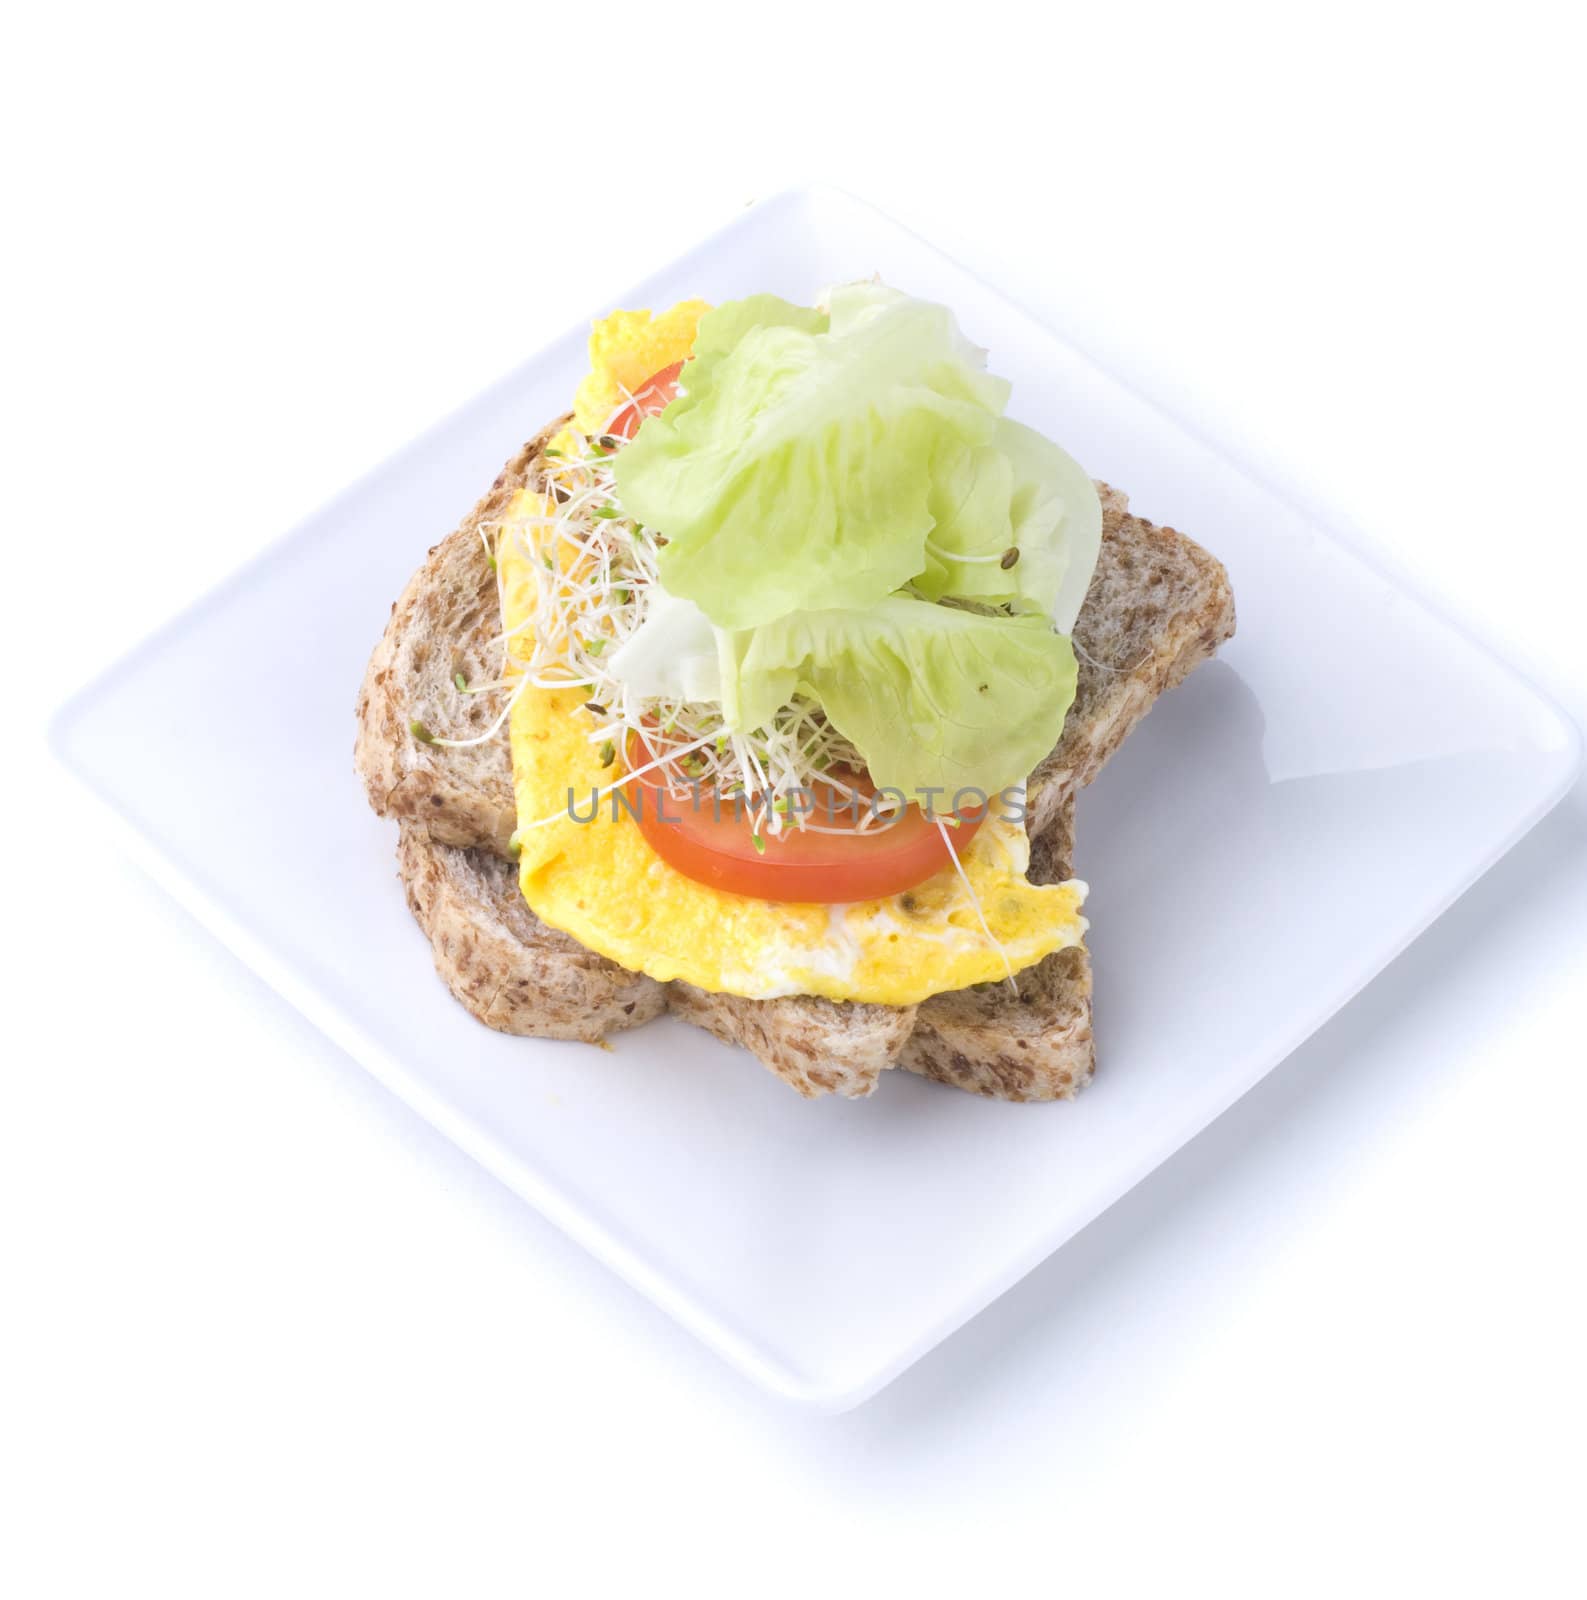 alfafa egg sandwich